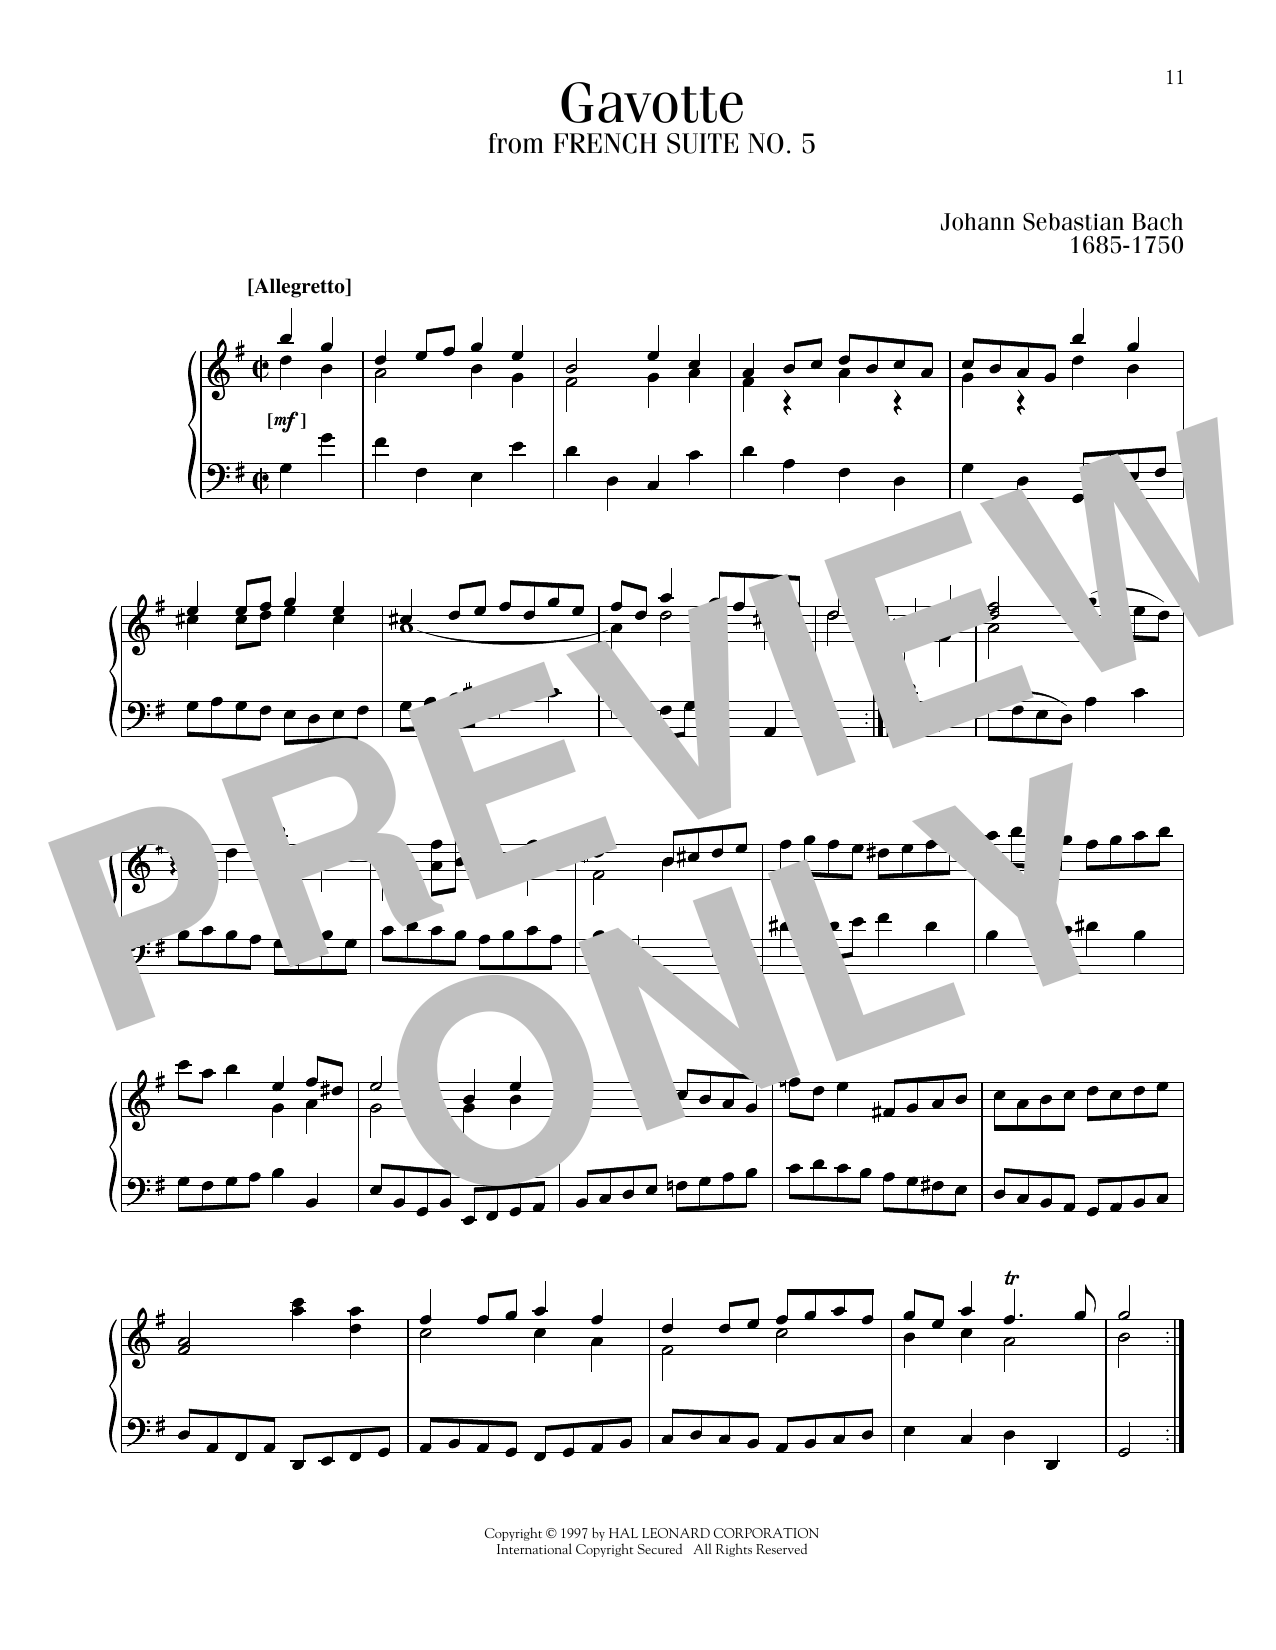 Johann Sebastian Bach Gavotte sheet music notes printable PDF score